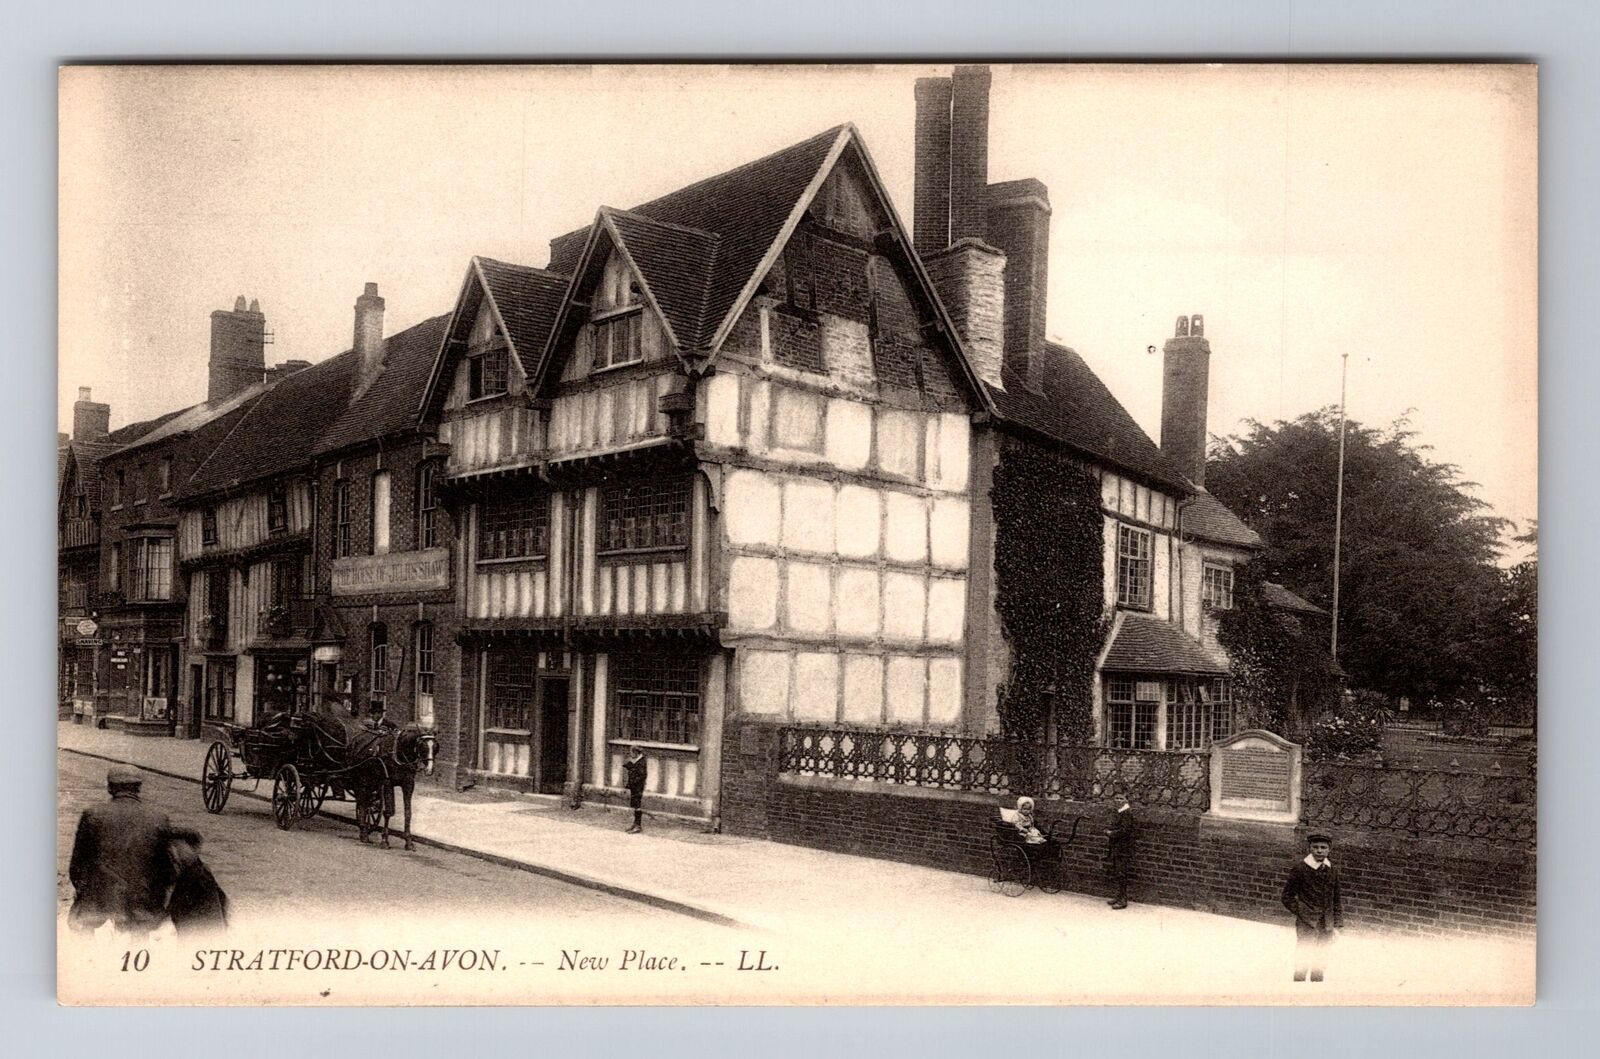 Stratford-upon-Avon-England, New Place, Antique, Vintage Souvenir Postcard